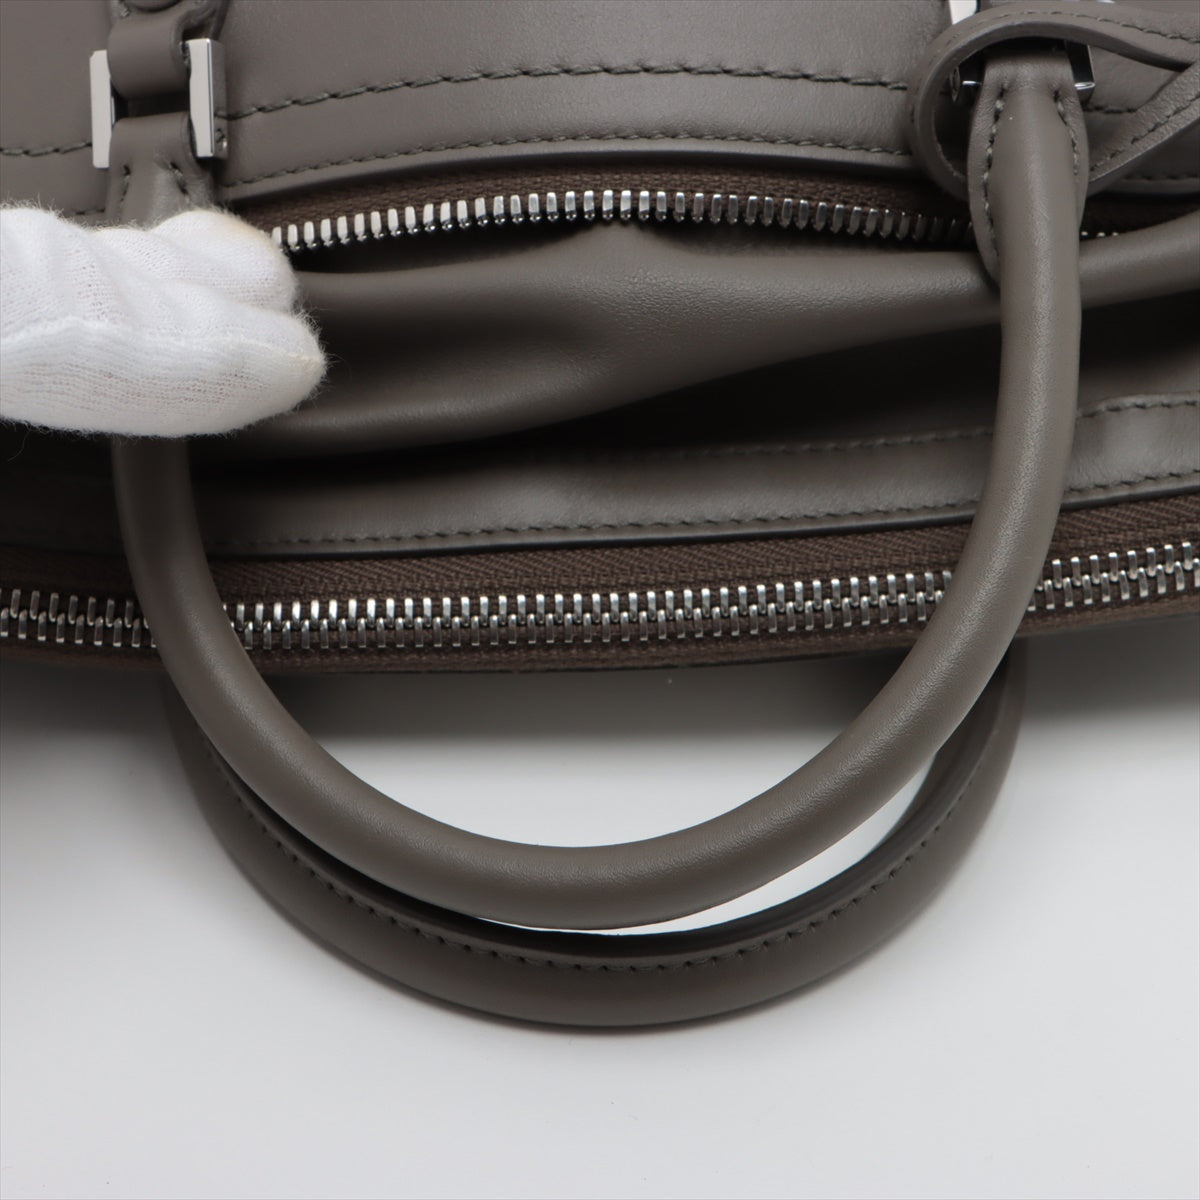 Maison Margiela 5AC Leather 2way handbag Grey